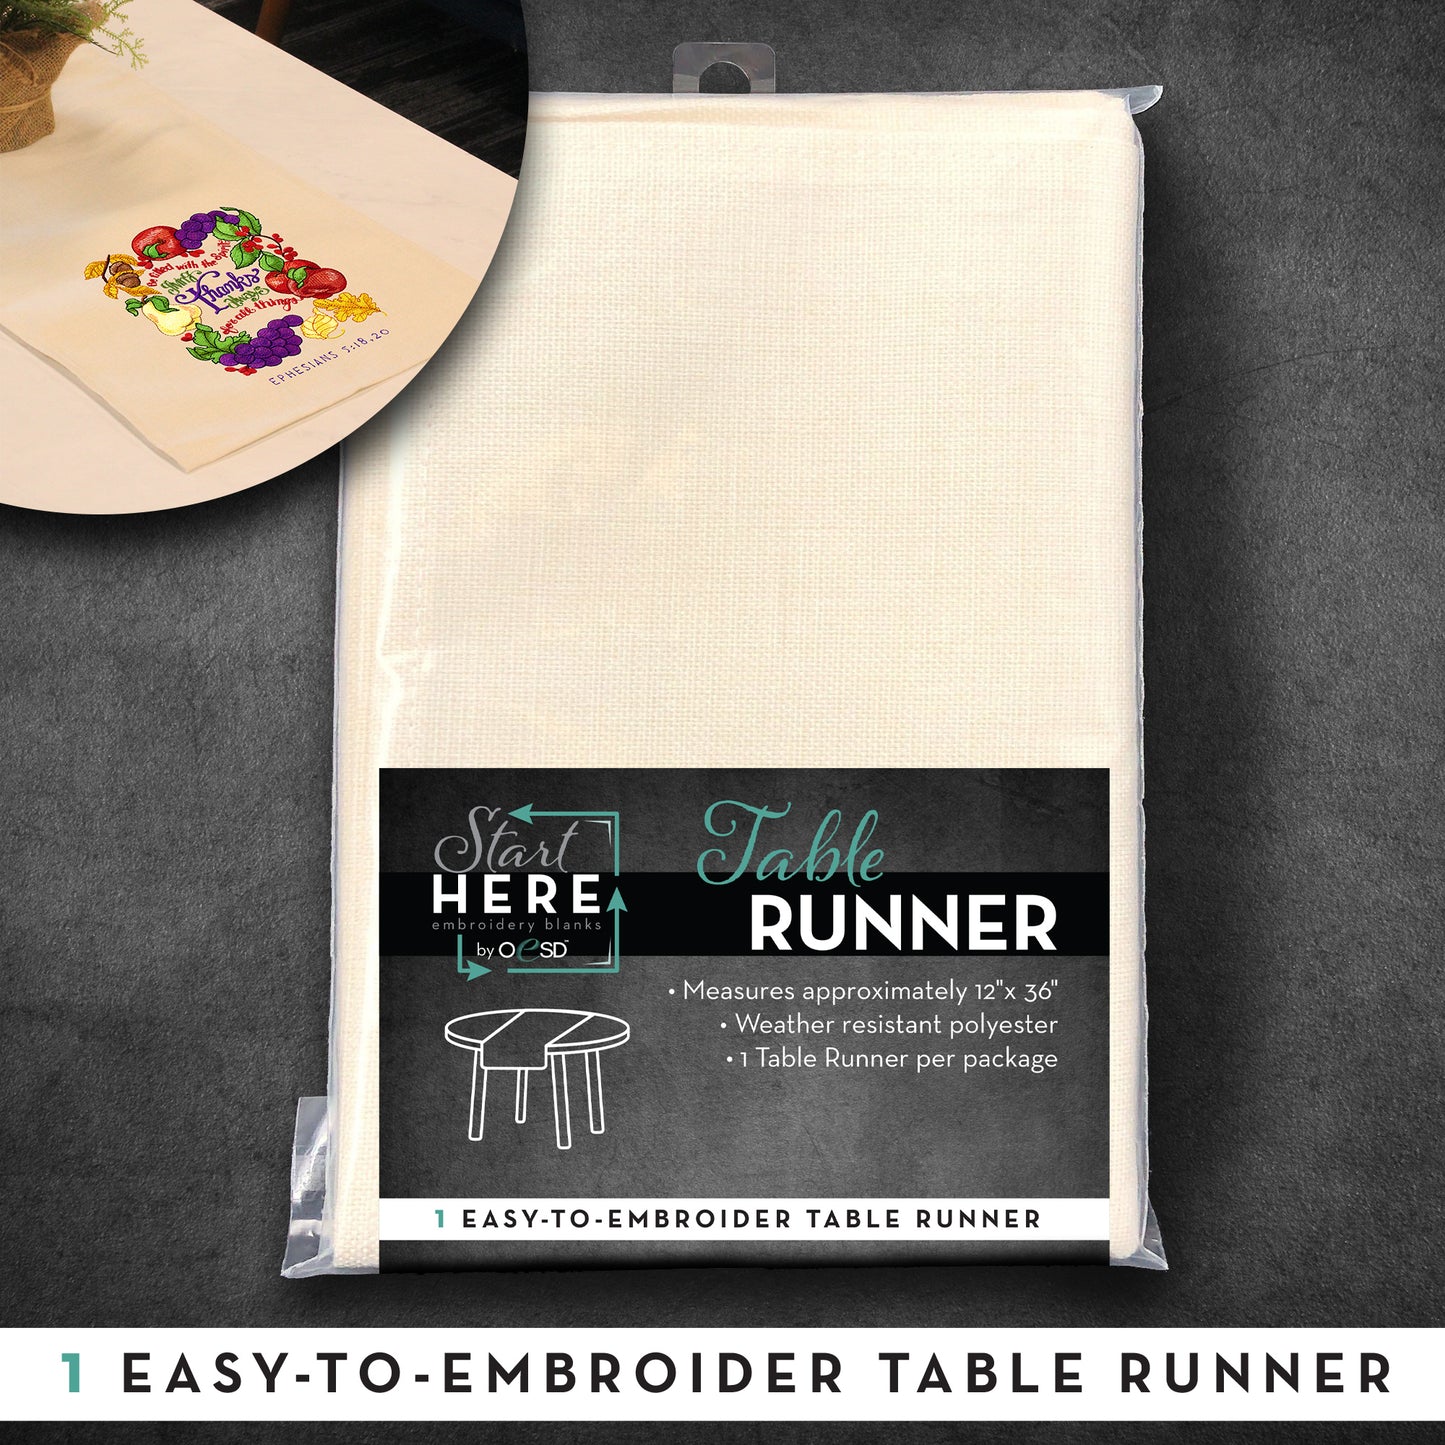 OESD Table Runner